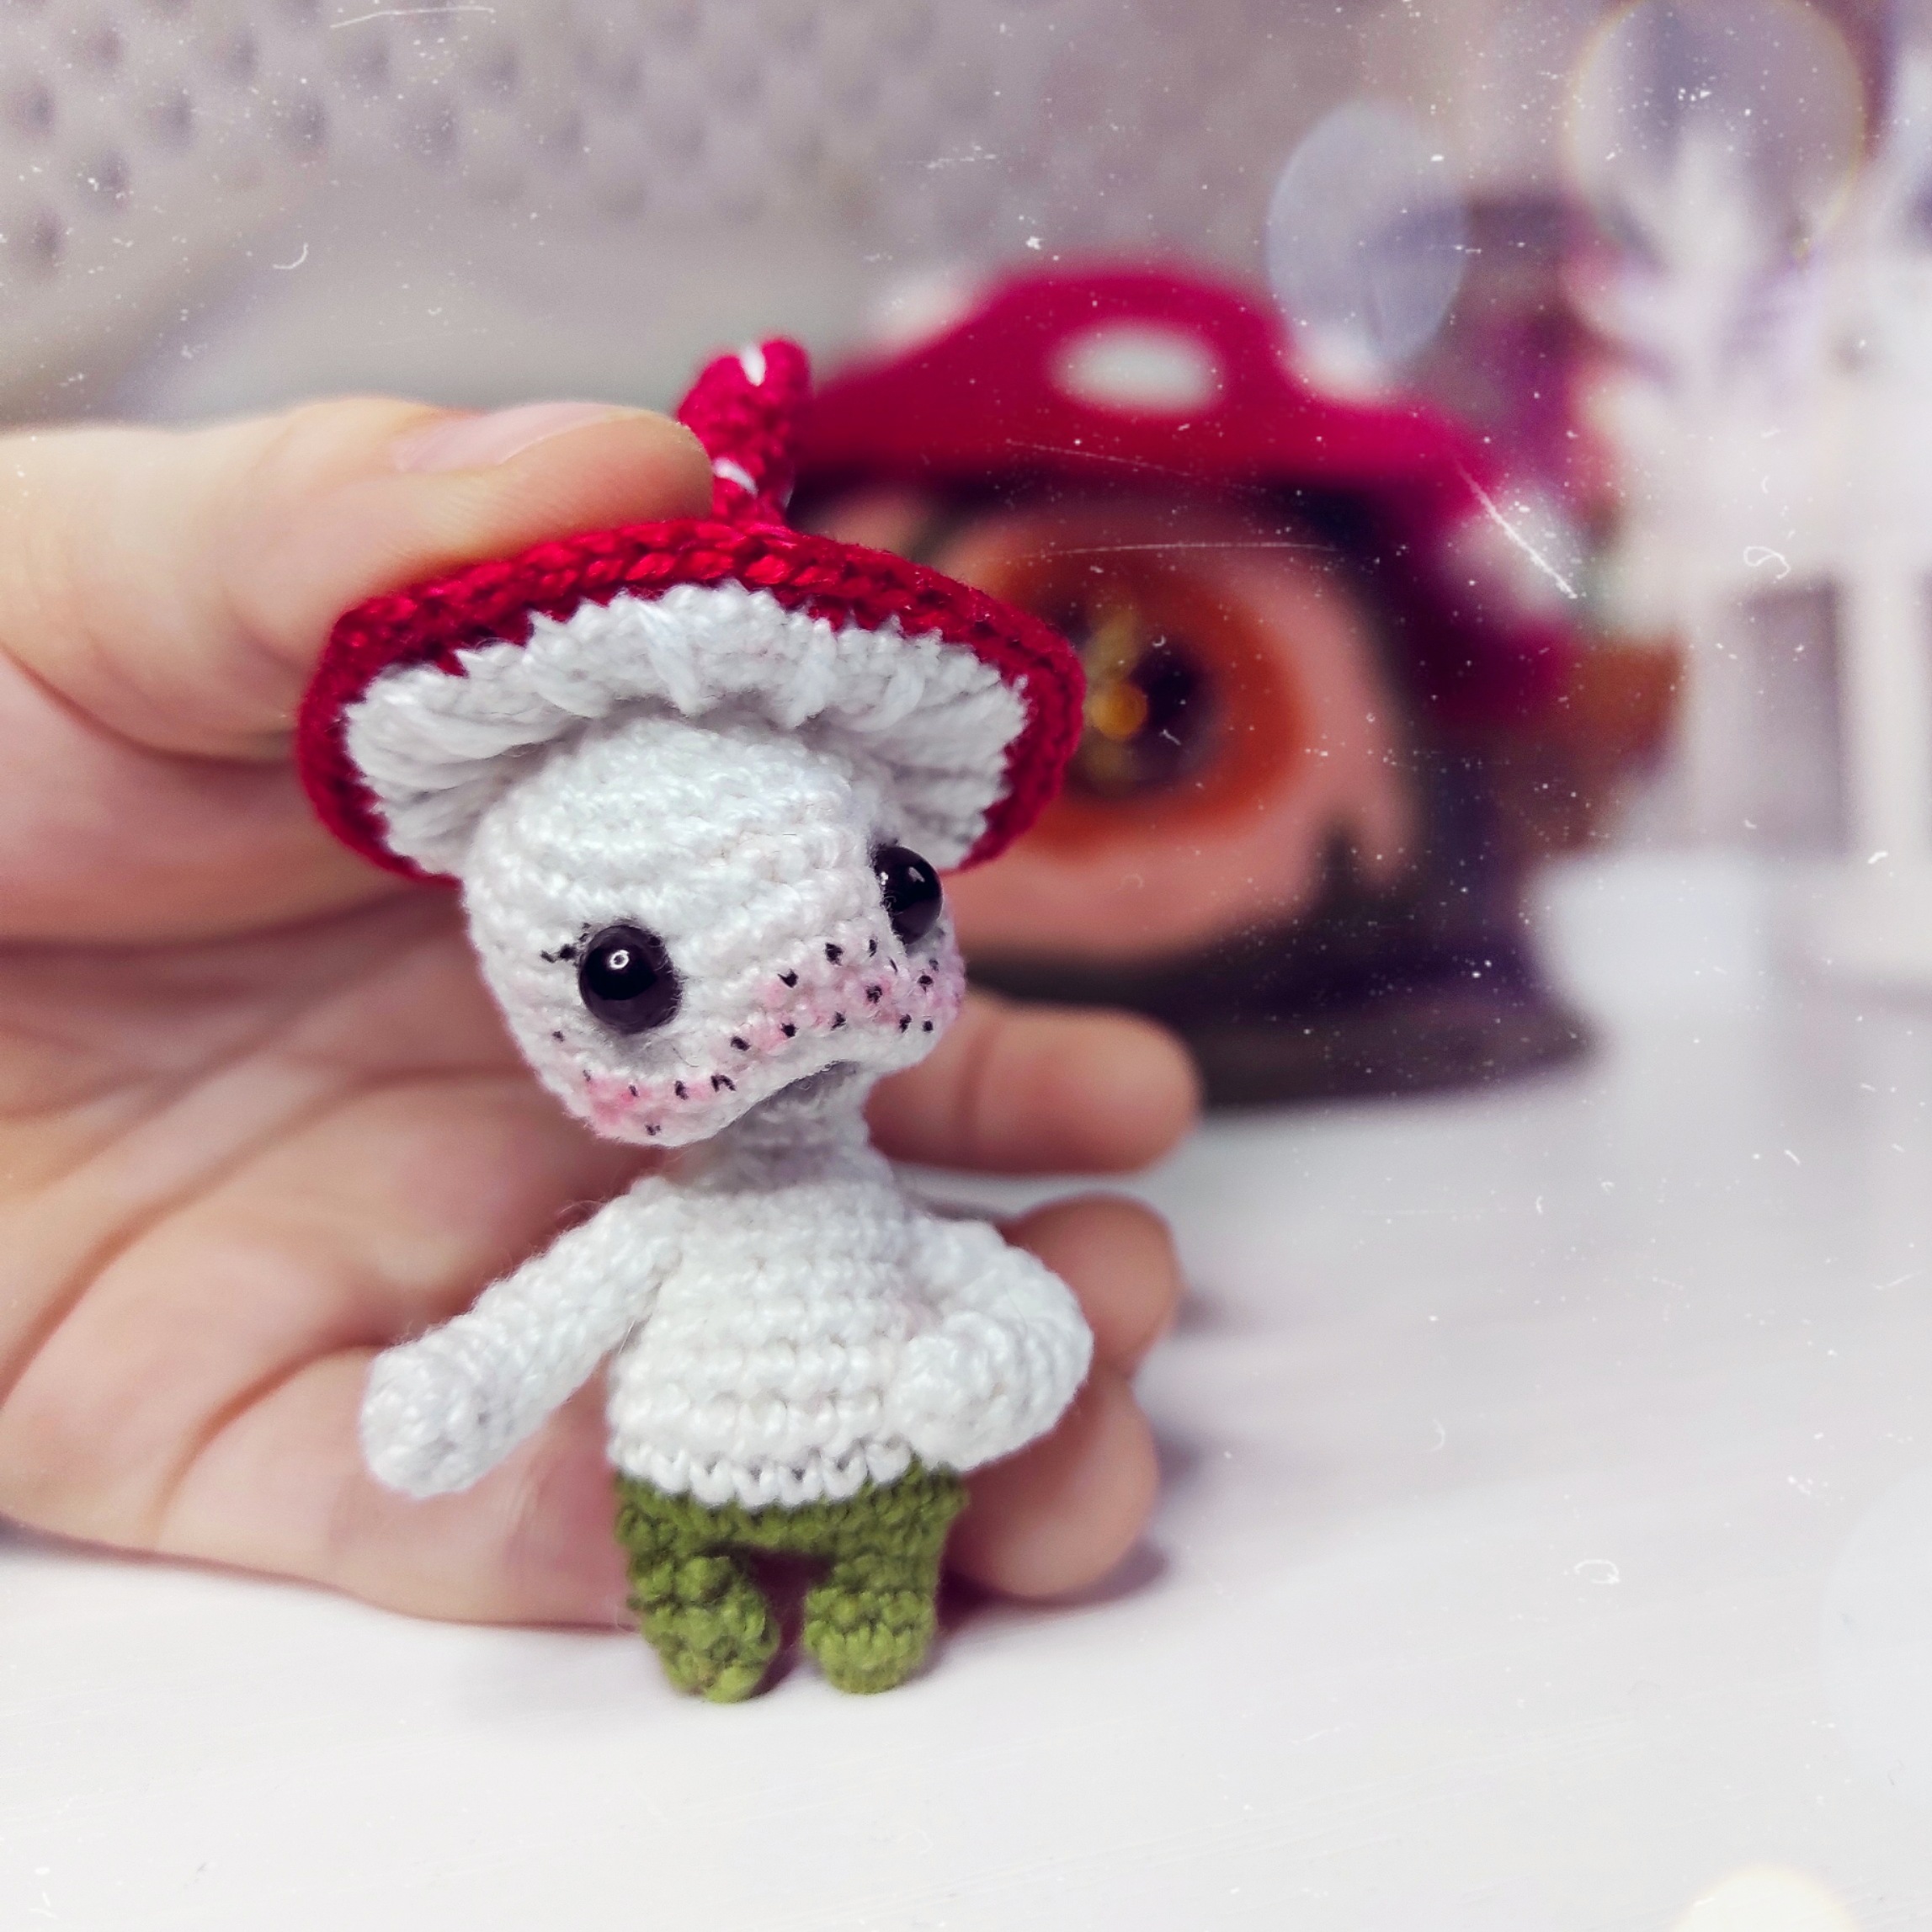 Crochet Mushroom Amigurumi Free Patterns & Paid - DIY Magazine